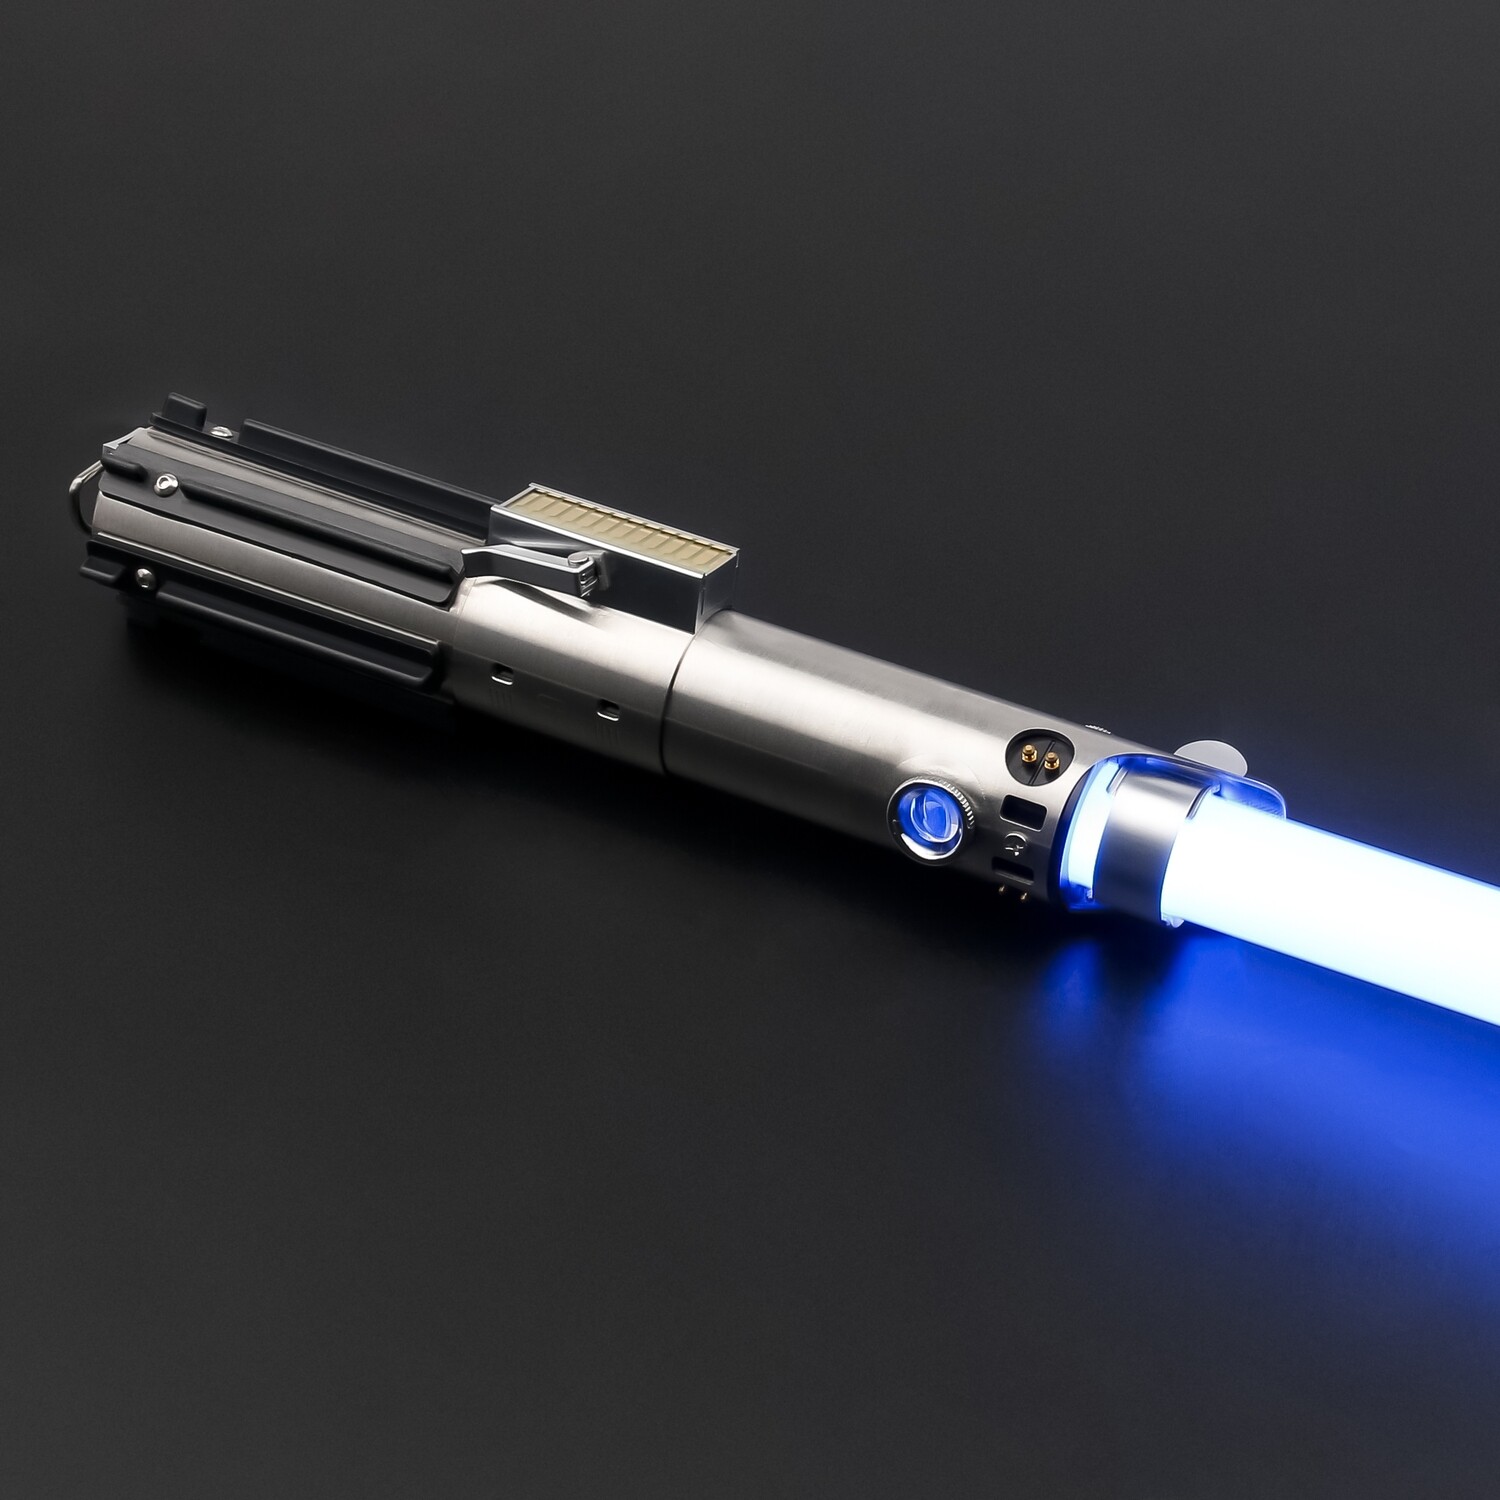 Skywalker - Imperial 720-B Lightsaber